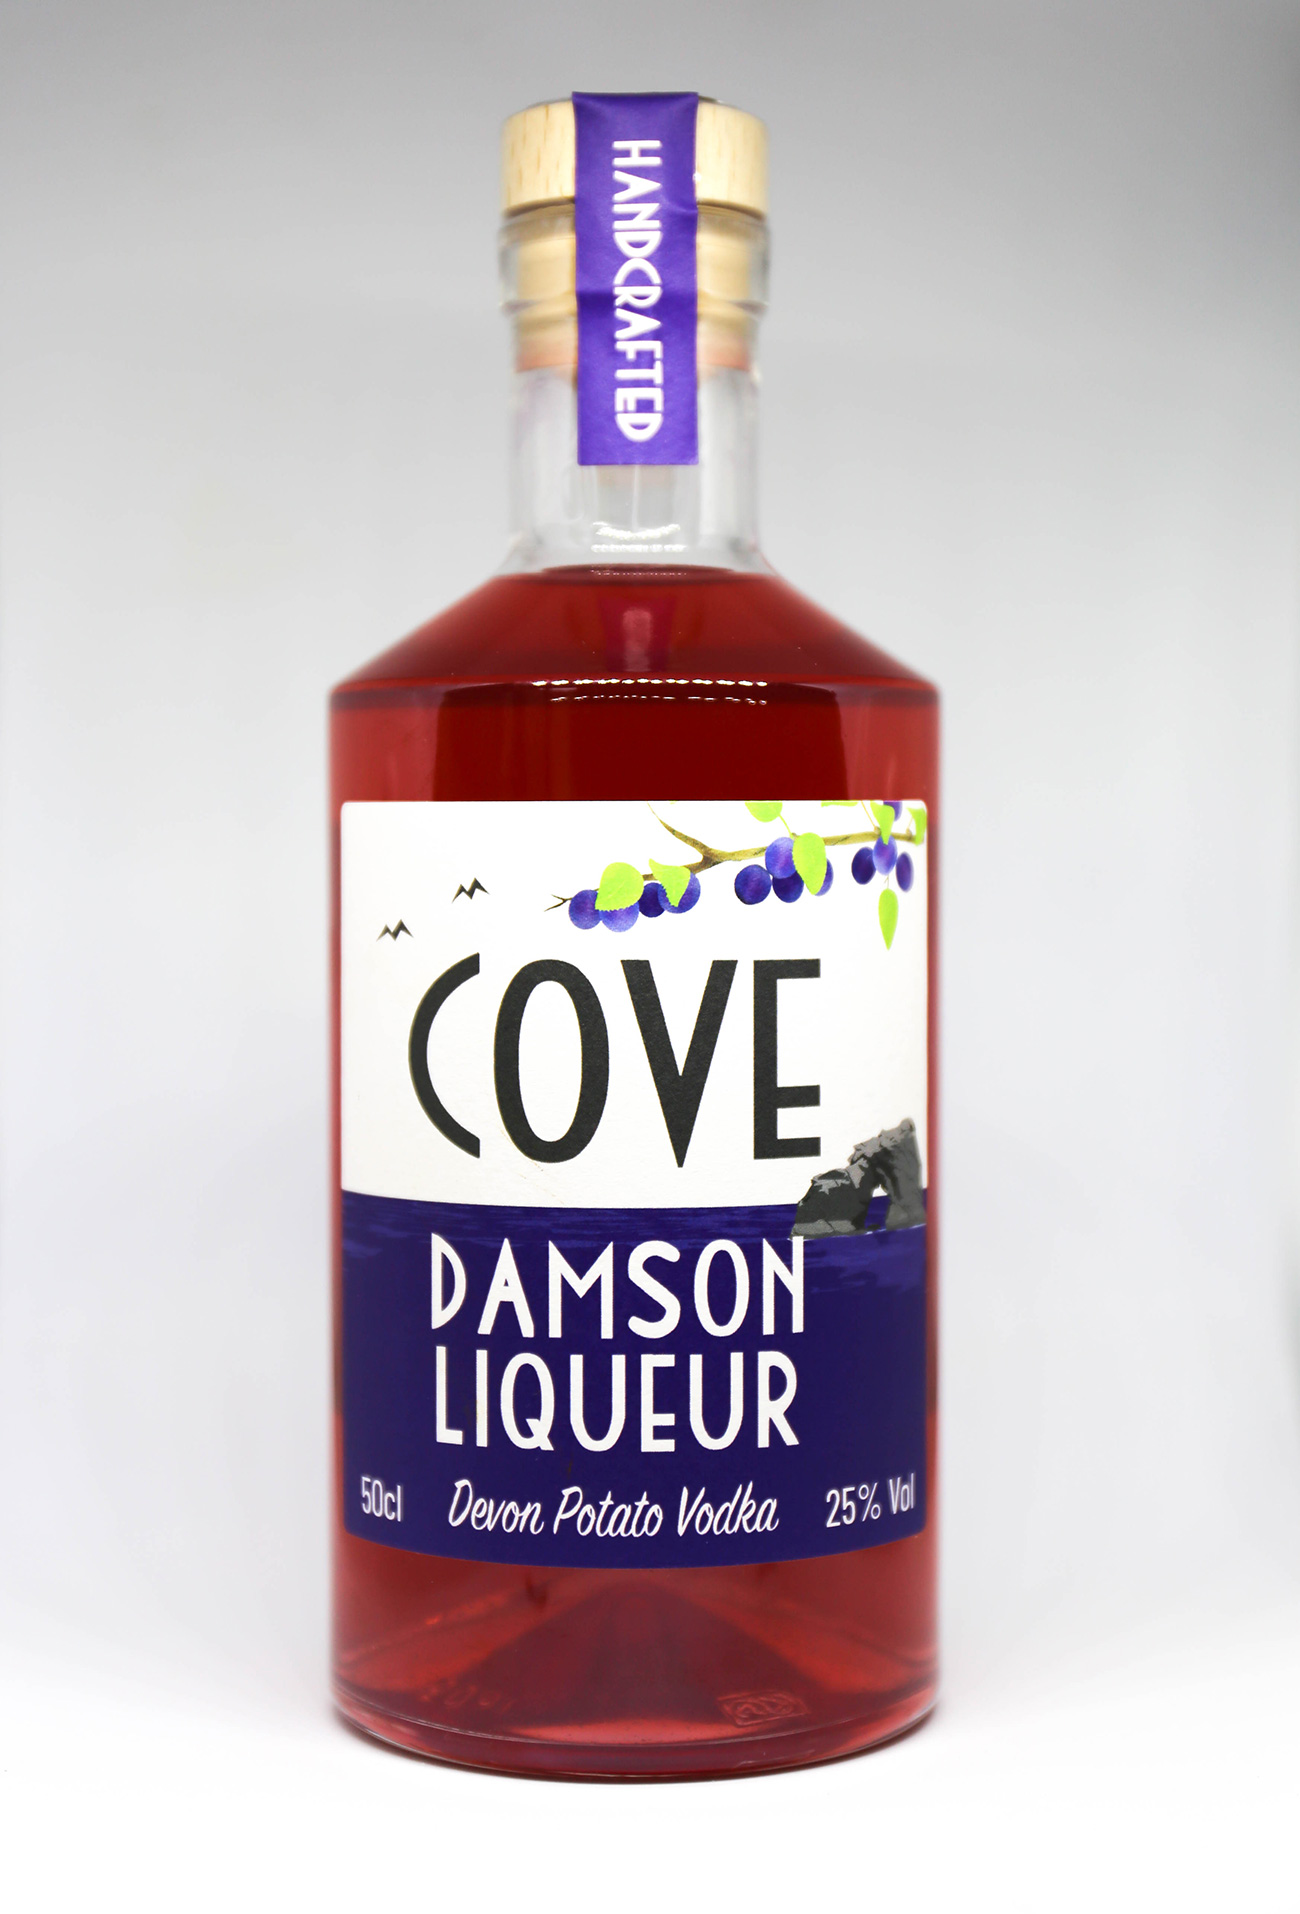 Cove Damson Liqueur Vodka Devon Wedding Produce1